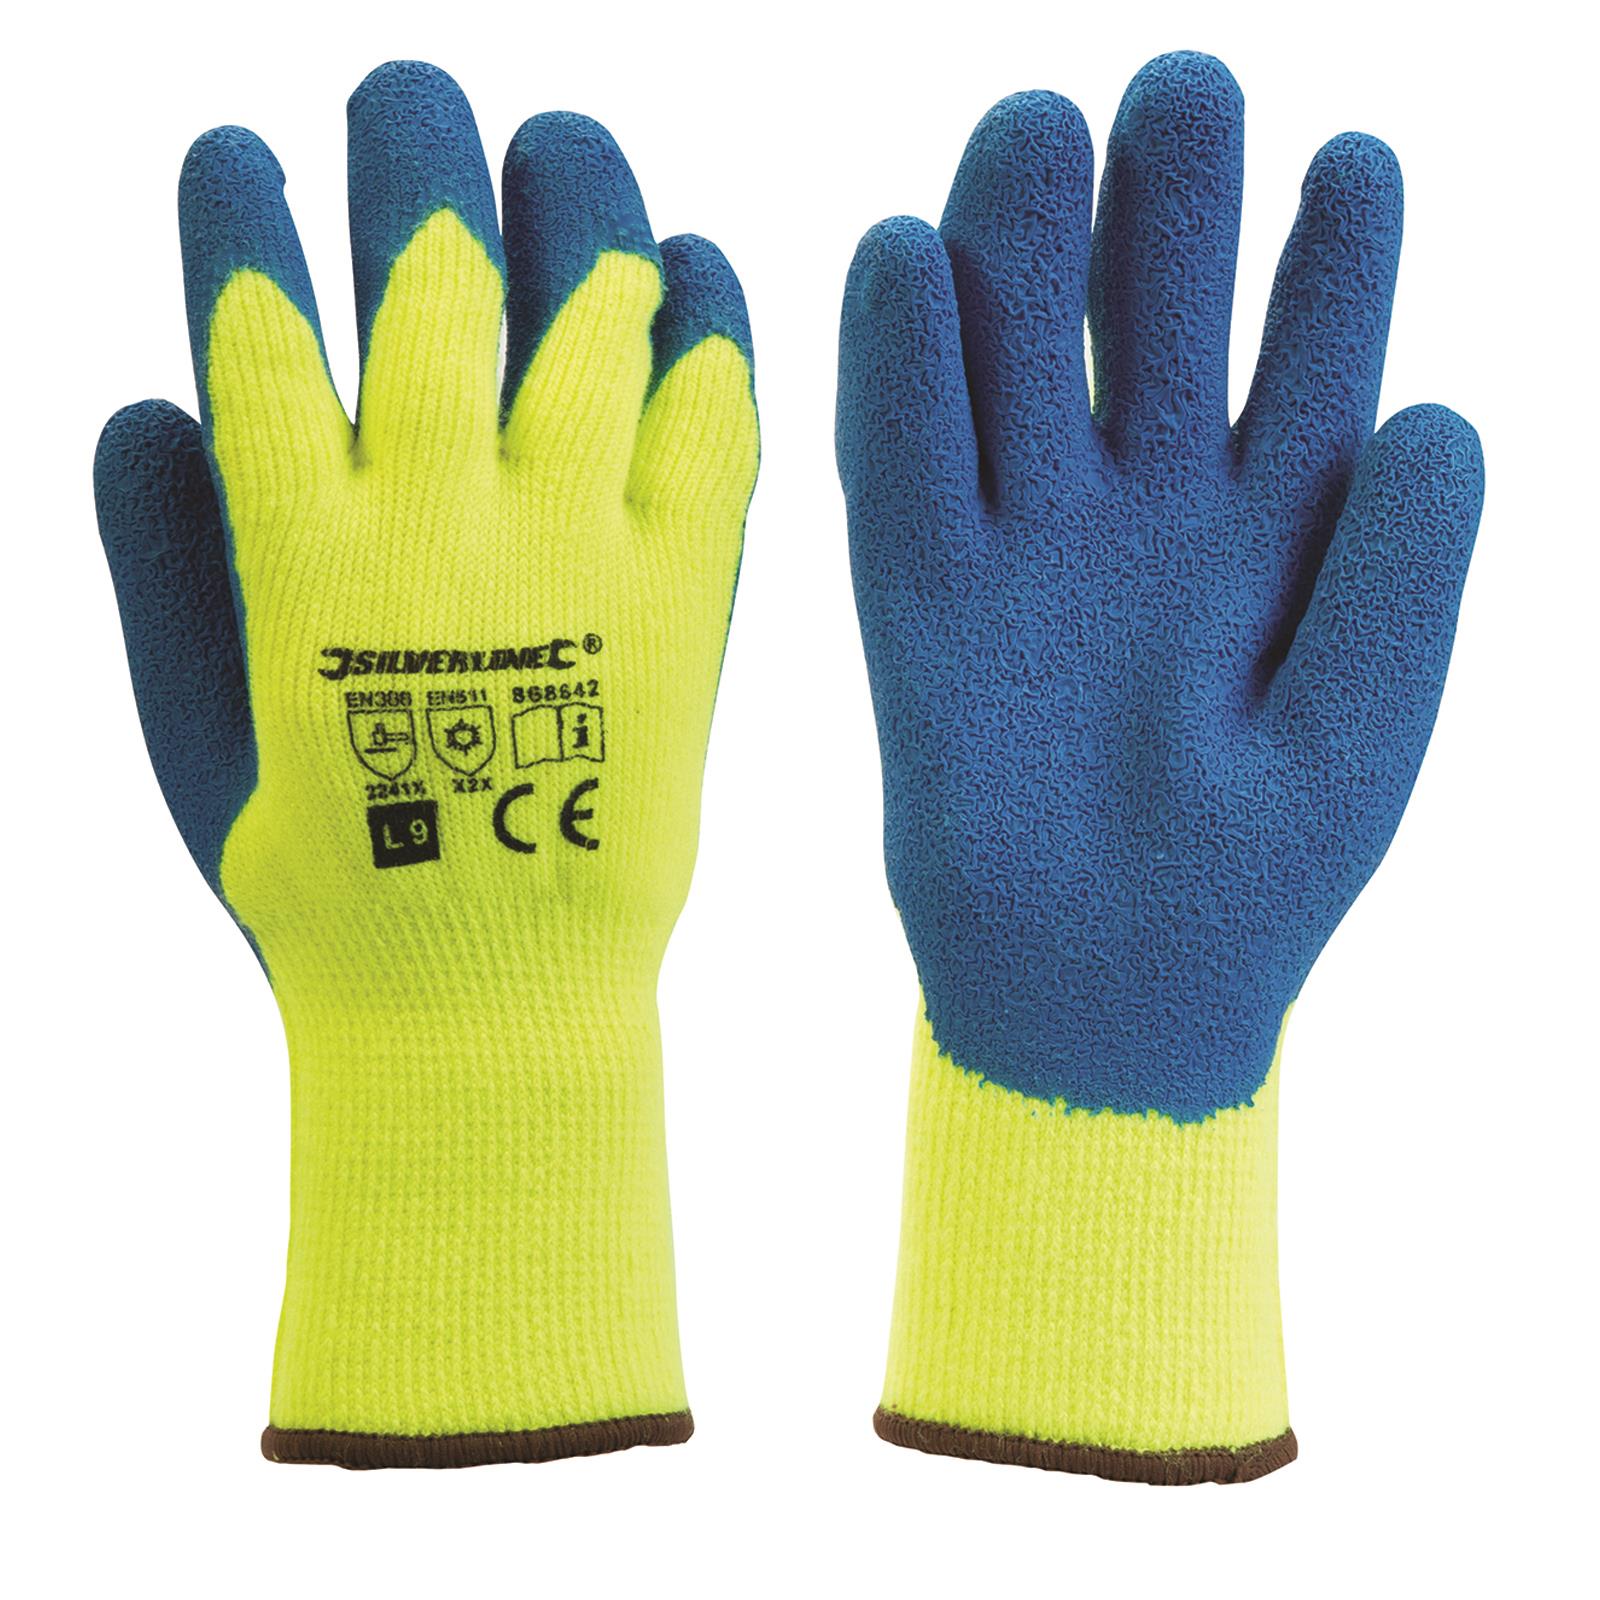 Silverline Thermal Builders Gloves L9